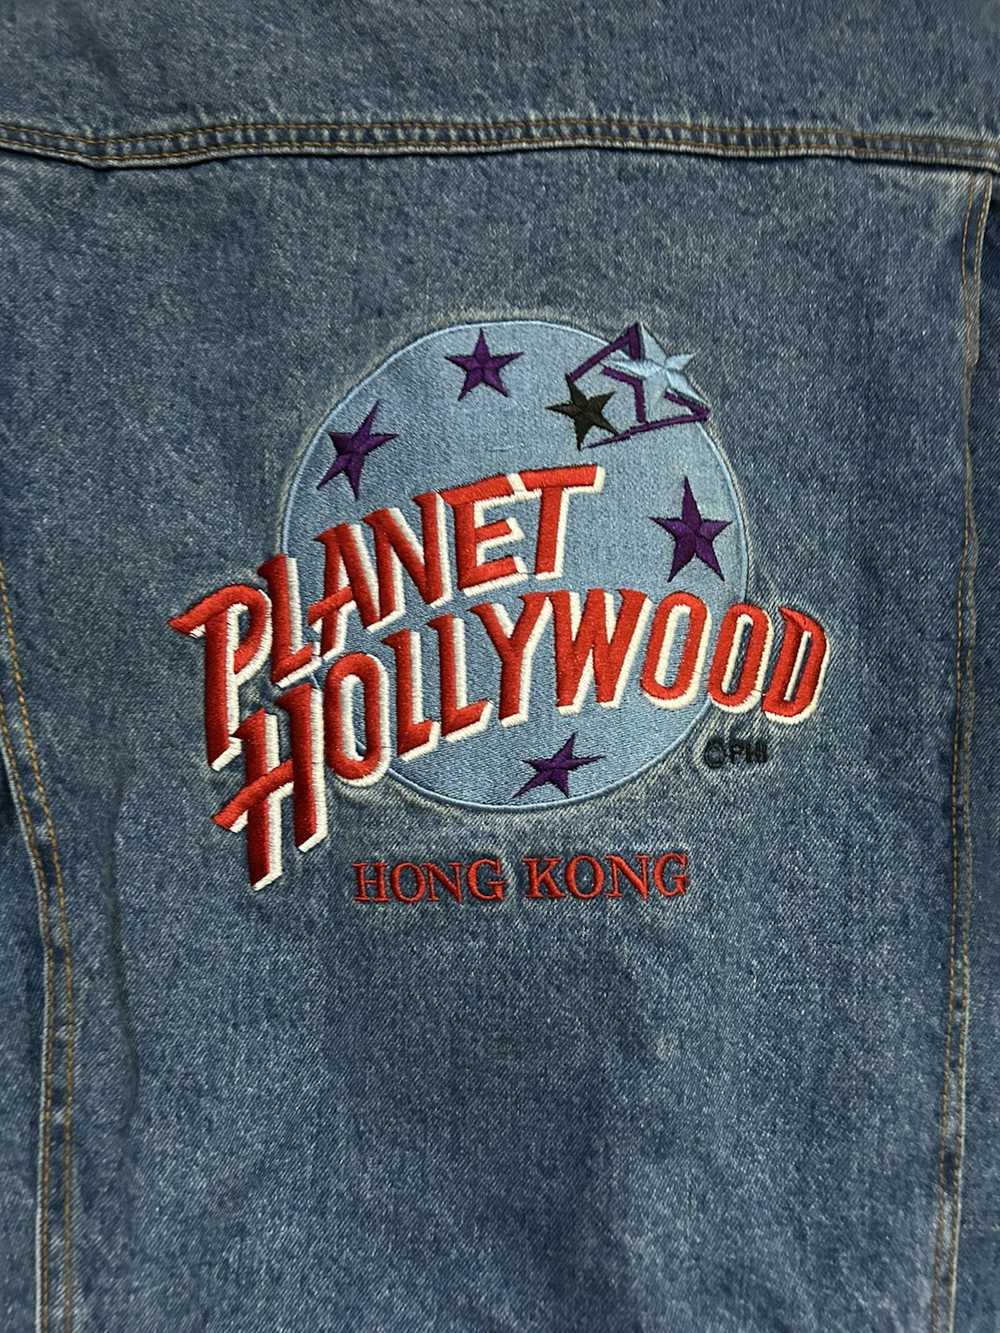 Planet Hollywood Planet Hollywood denim jacket M - image 4